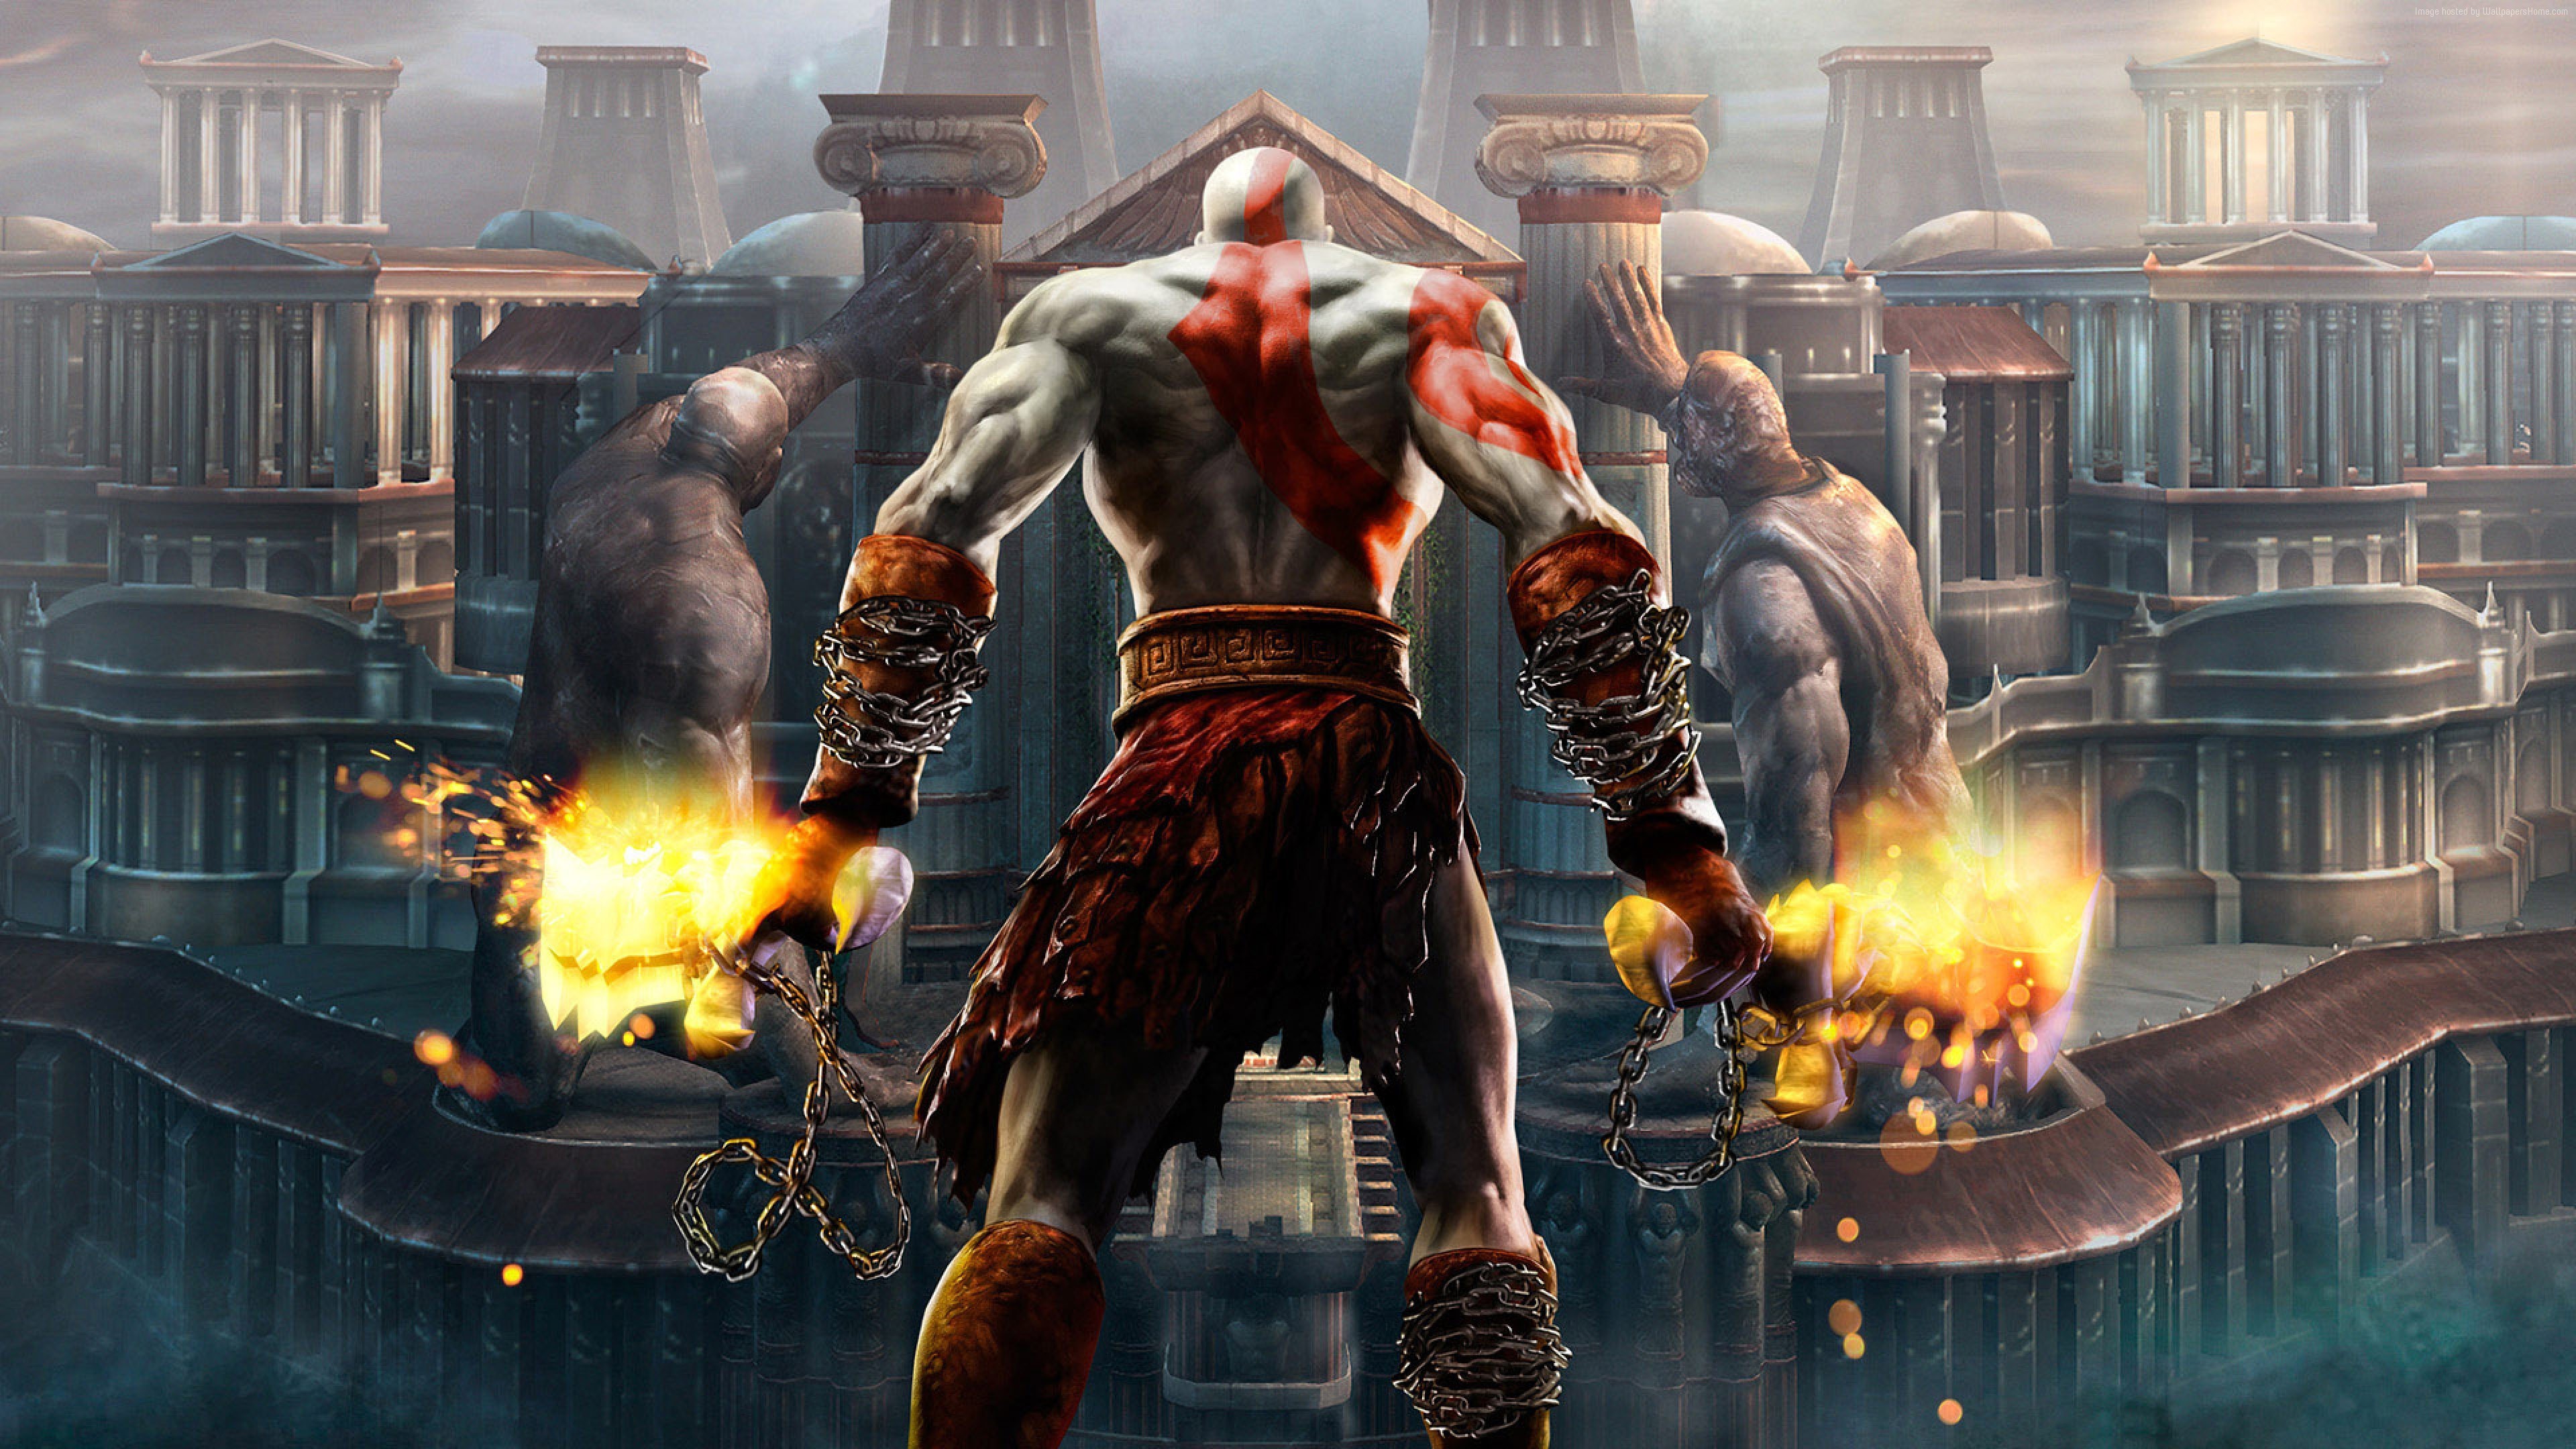 Wallpaper ID 412970  Video Game God of War 2018 Phone Wallpaper Kratos  God Of War 1080x1920 free download